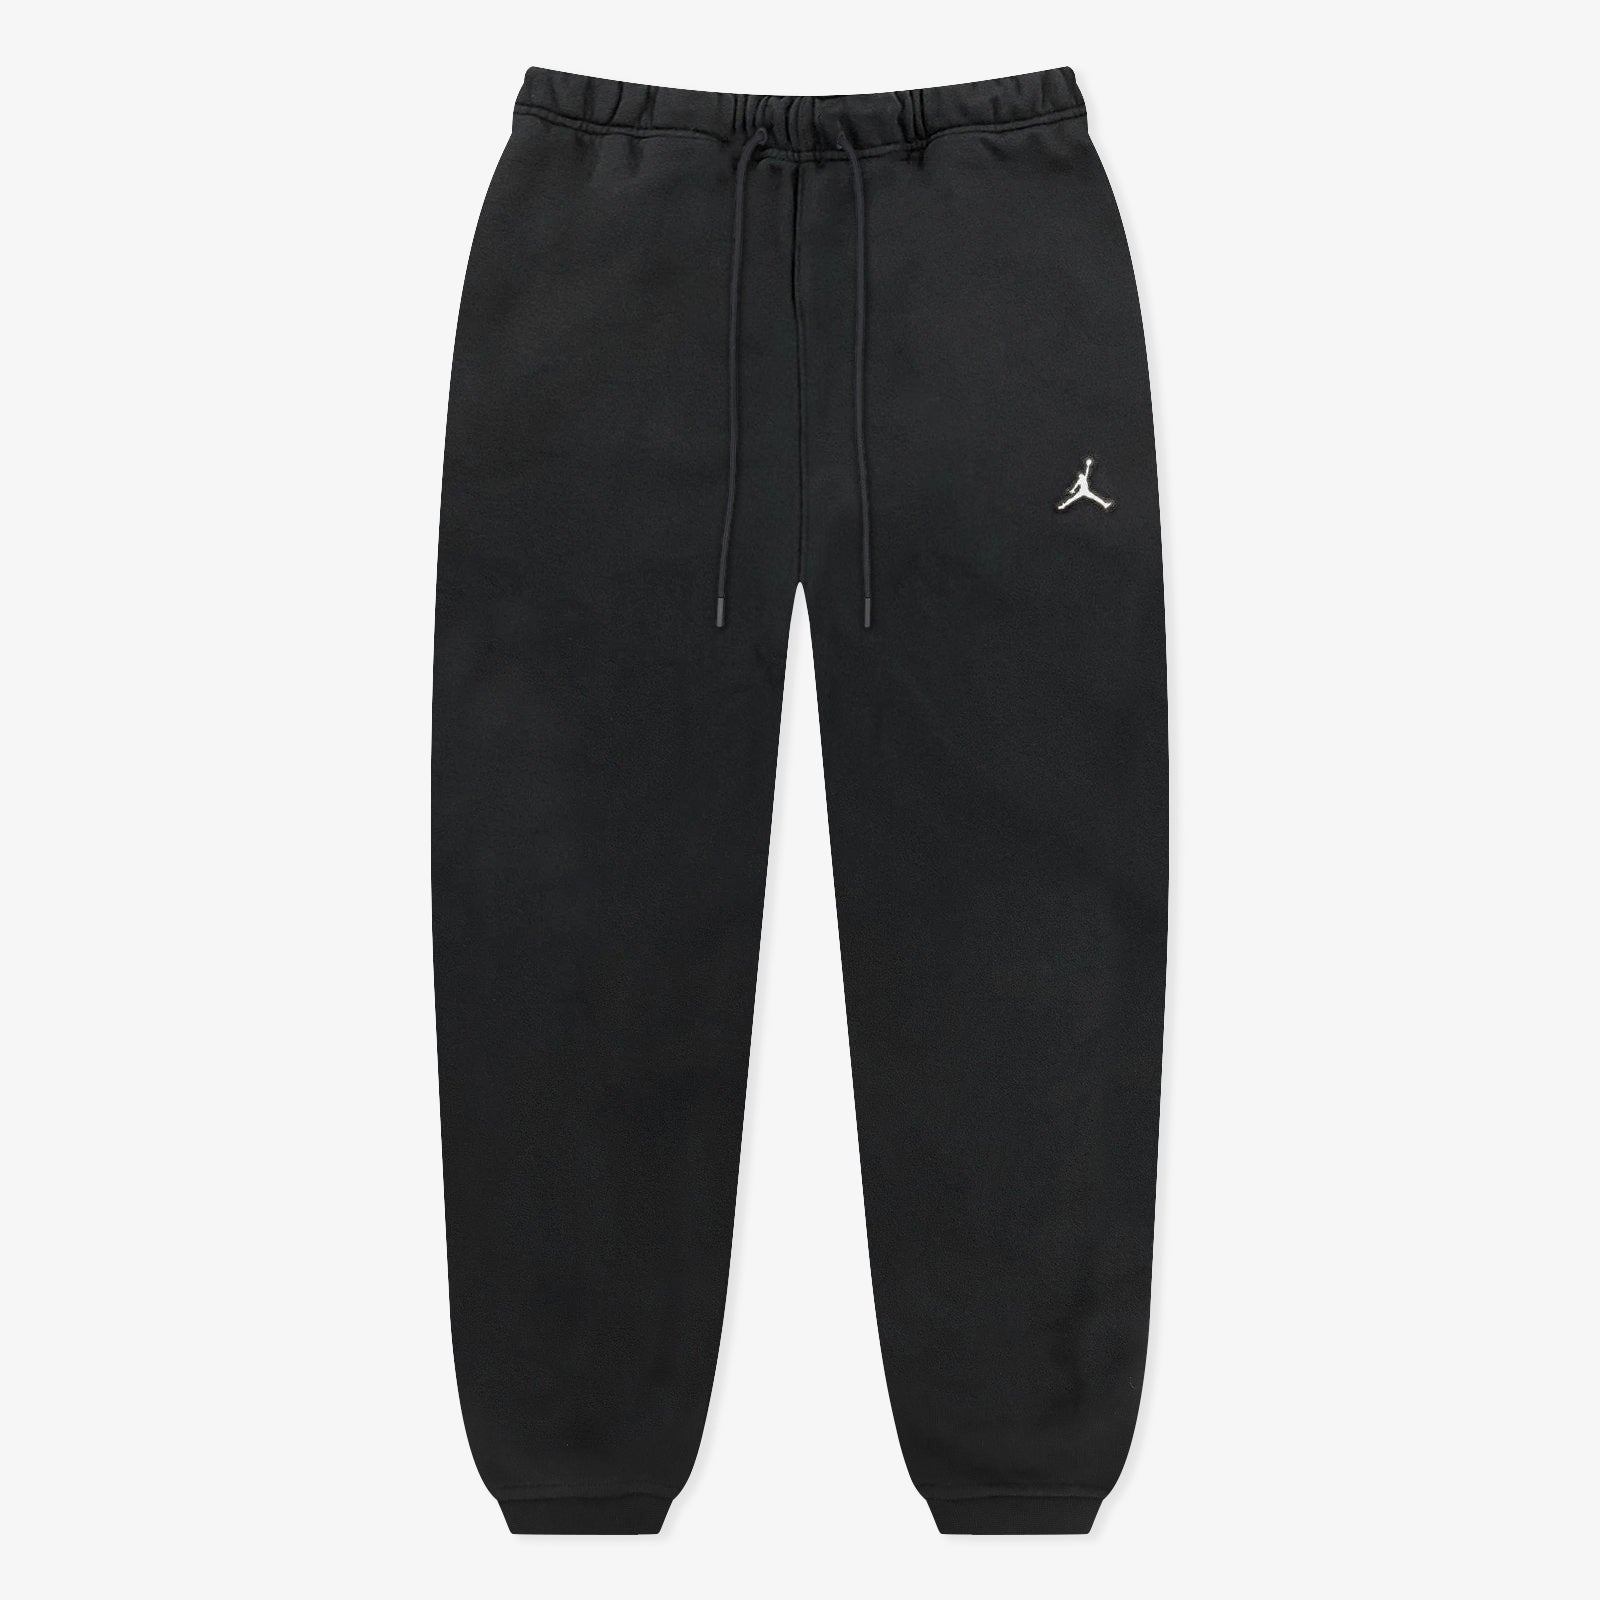 Jordan Pants  Tights Nikecom